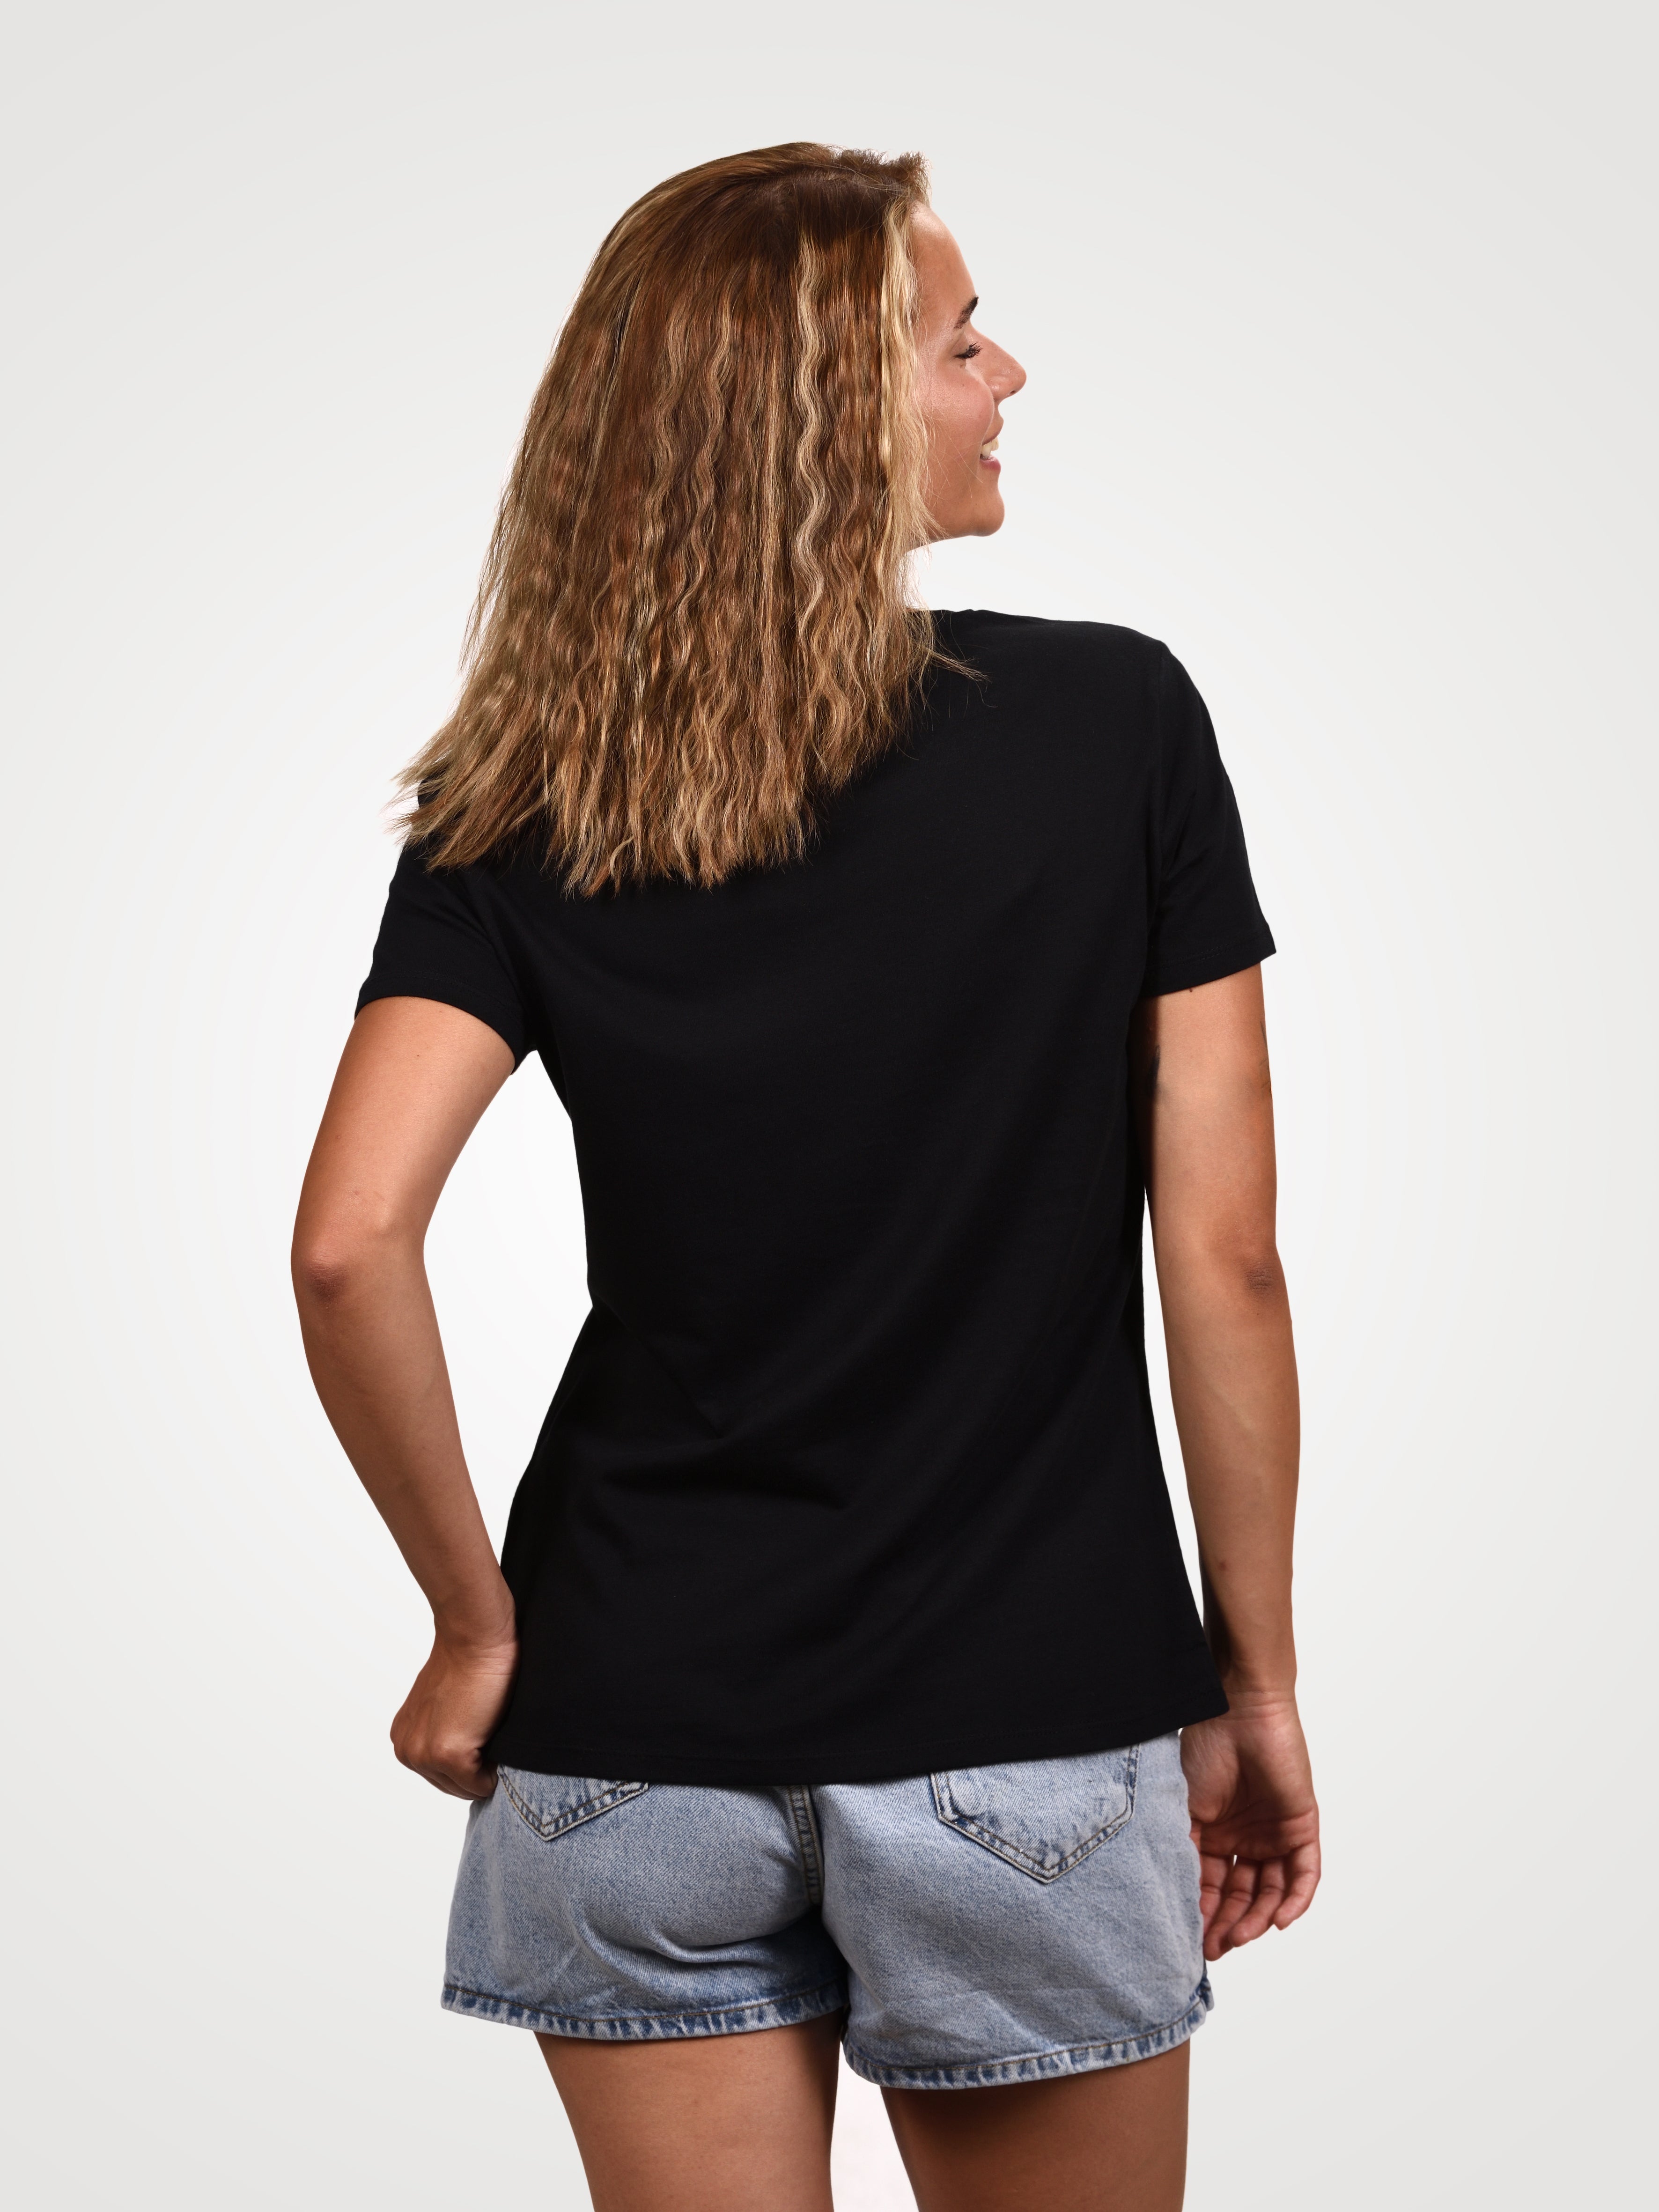 Damen T-Shirt -Chameleon - schwarz